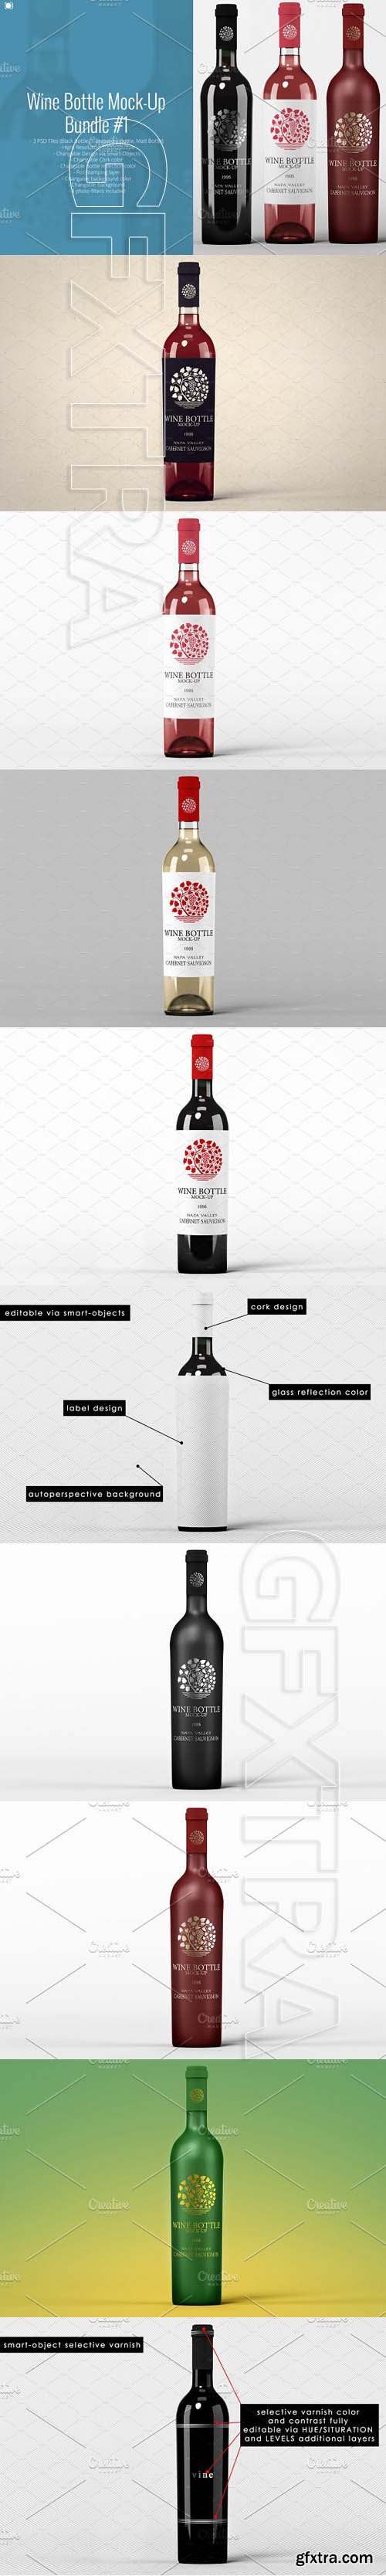 CreativeMarket - Wine Bottle Mock-Up Bundle 1 1802553